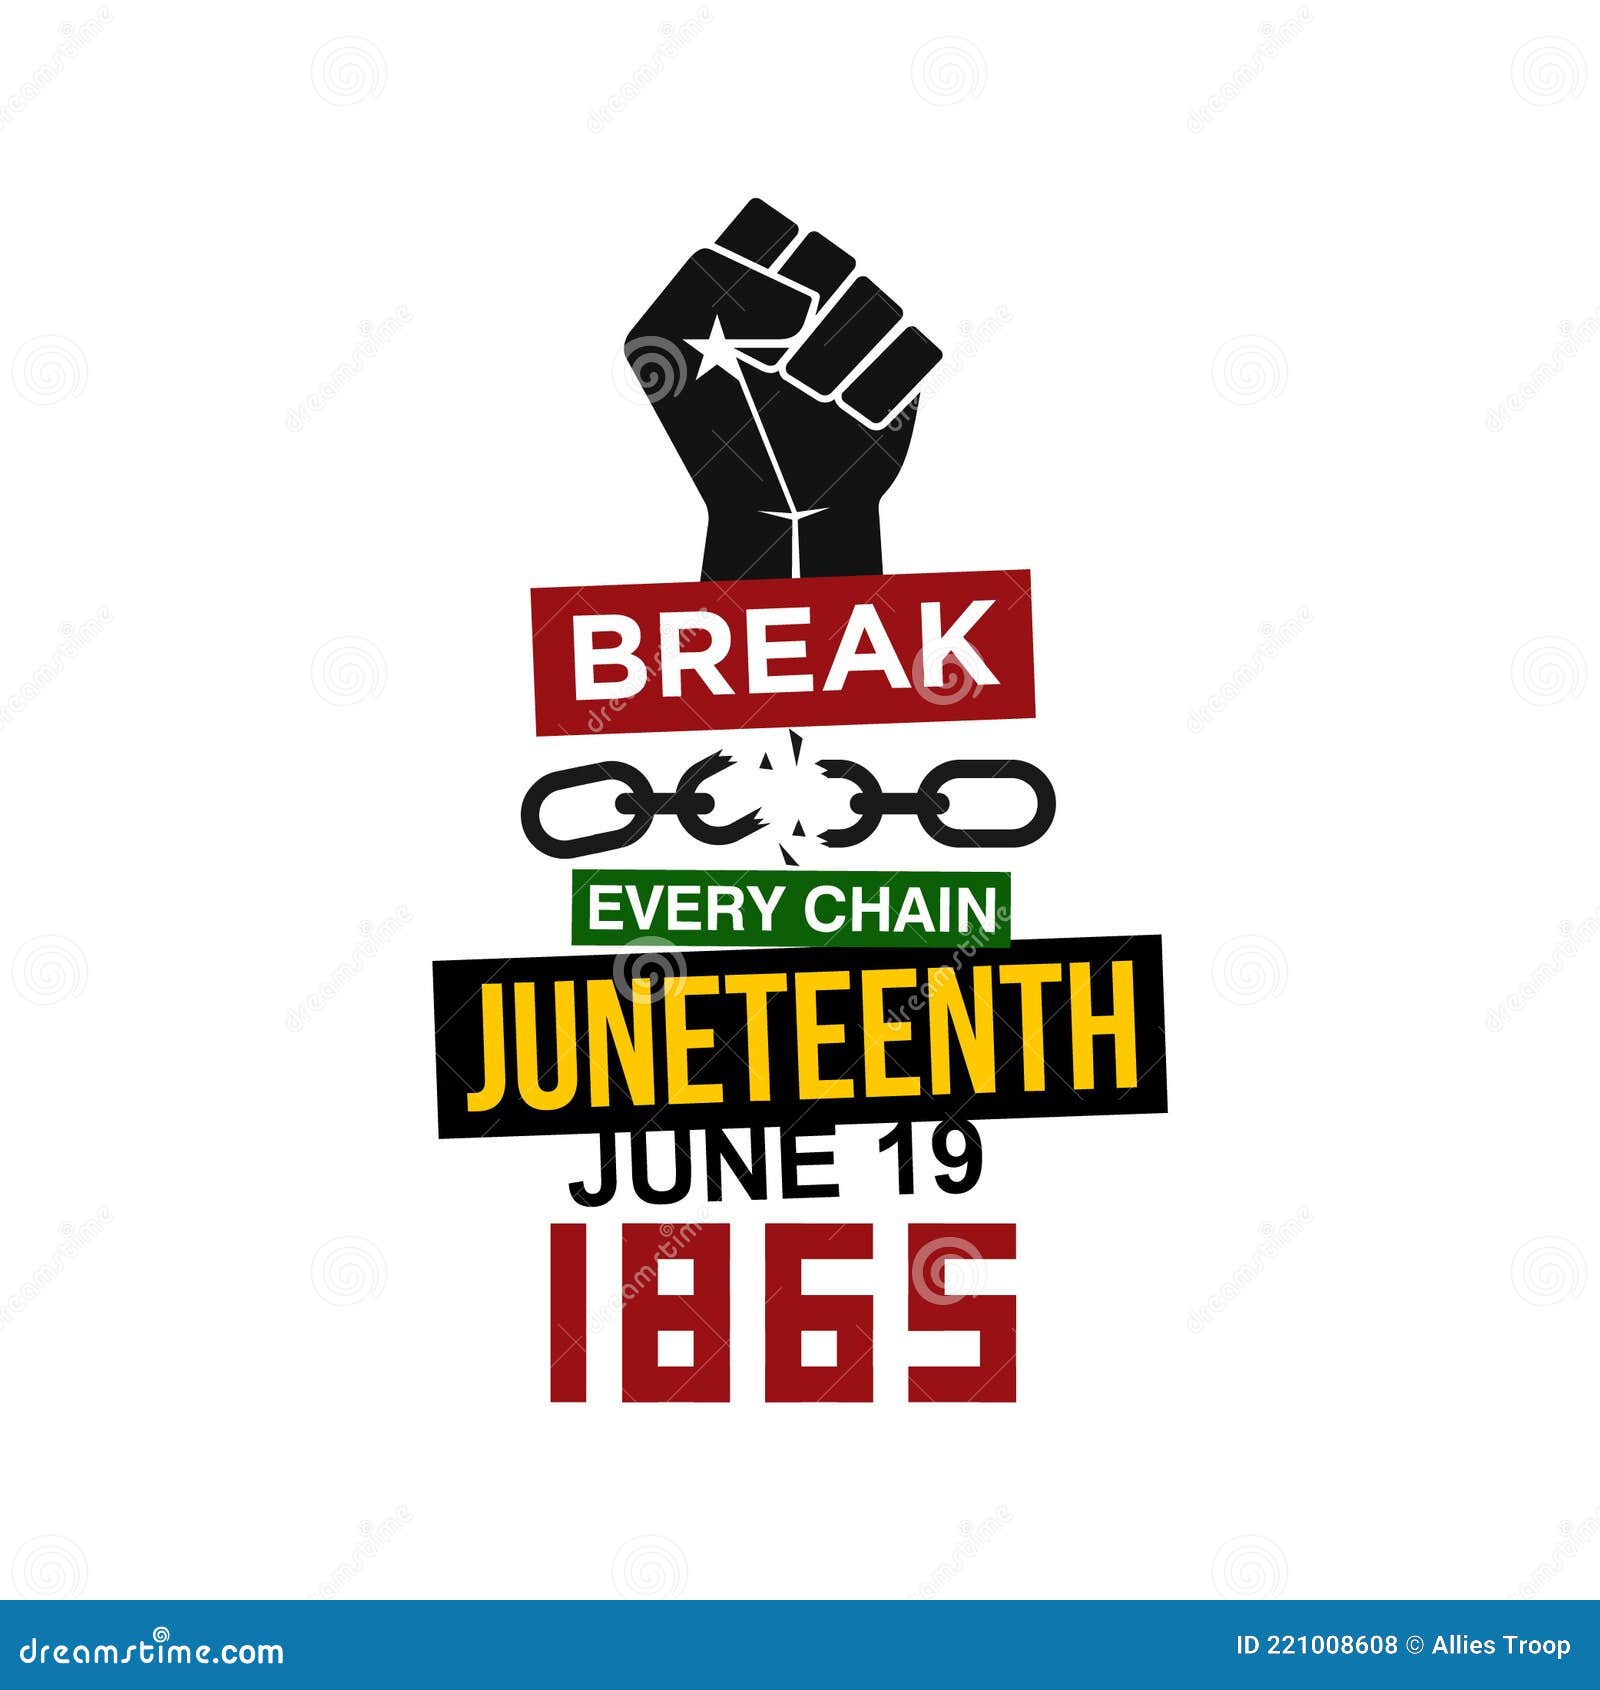 break every chain. juneteenth. june 19, 1865